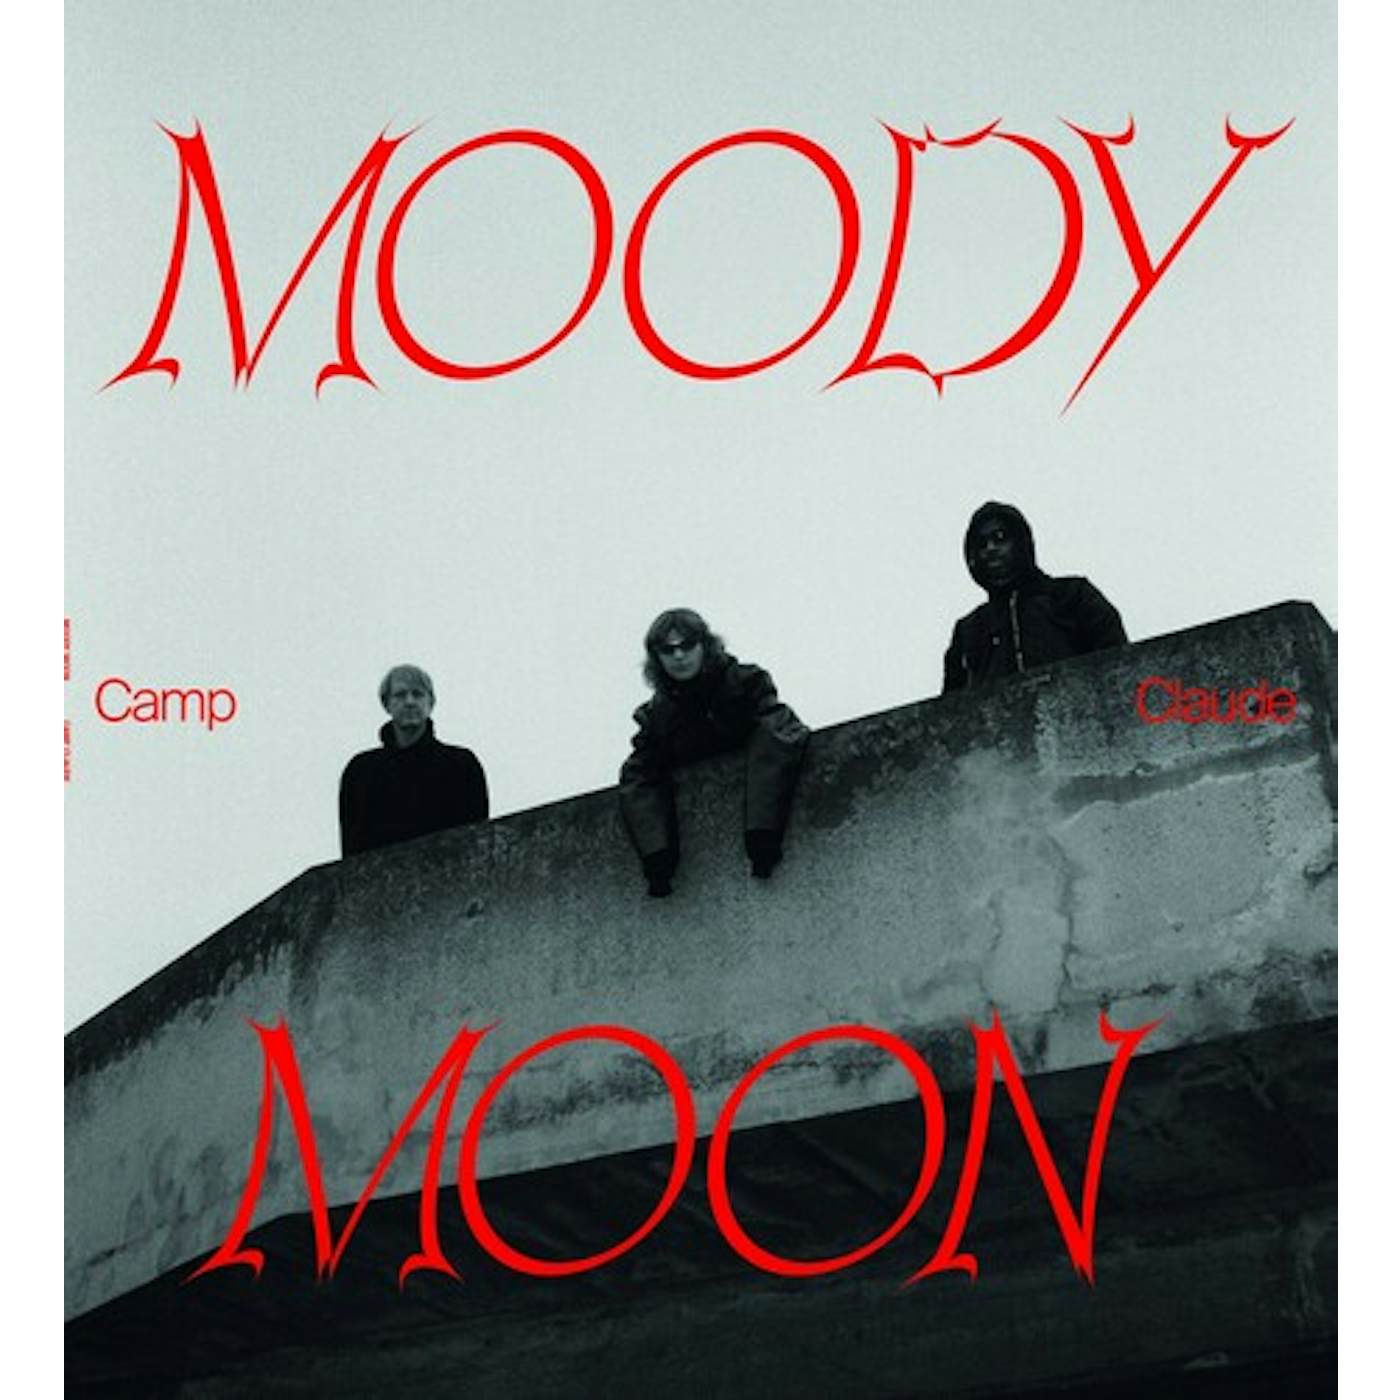 Camp Claude Moody Moon Vinyl Record